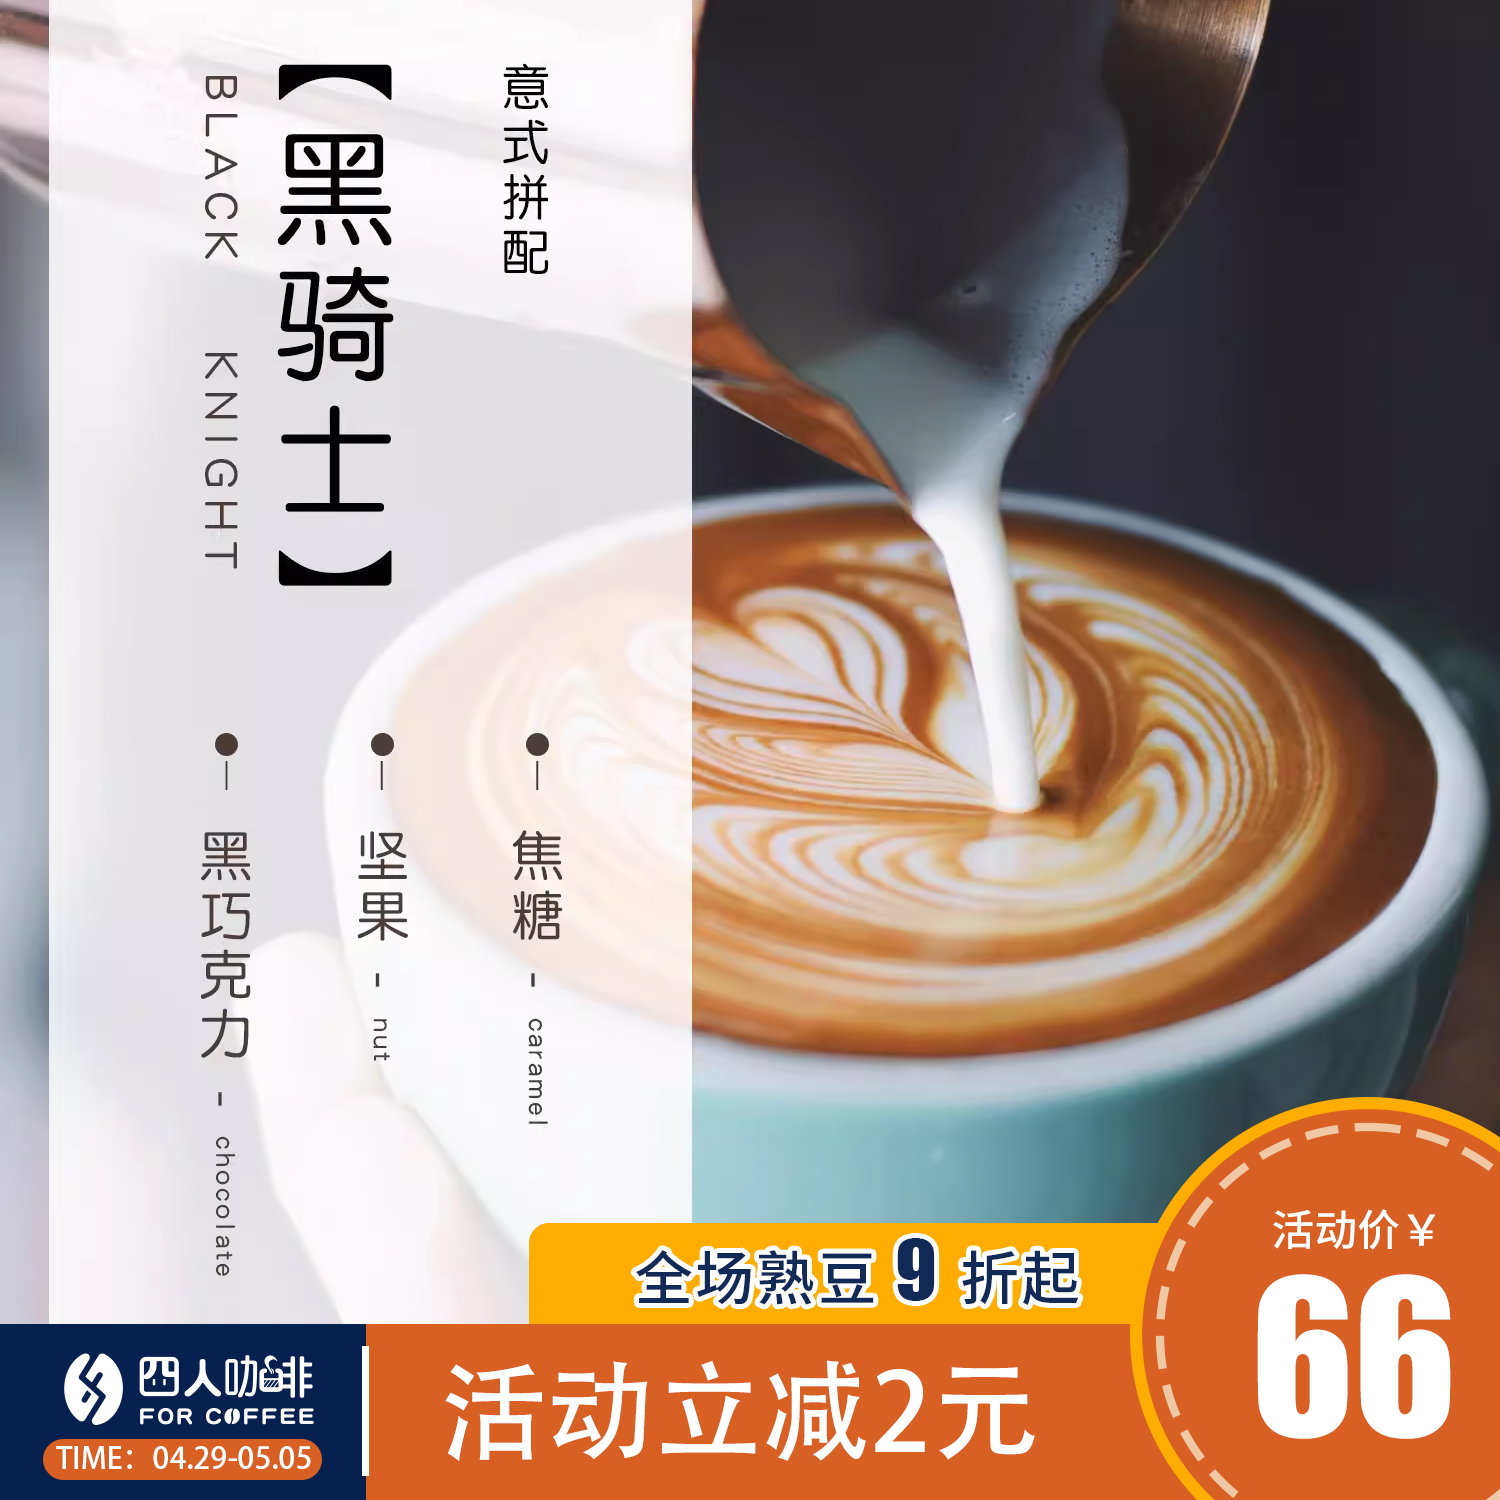 FOR COFFEE 四人咖啡 黑骑士 意式拼配咖啡豆 454g